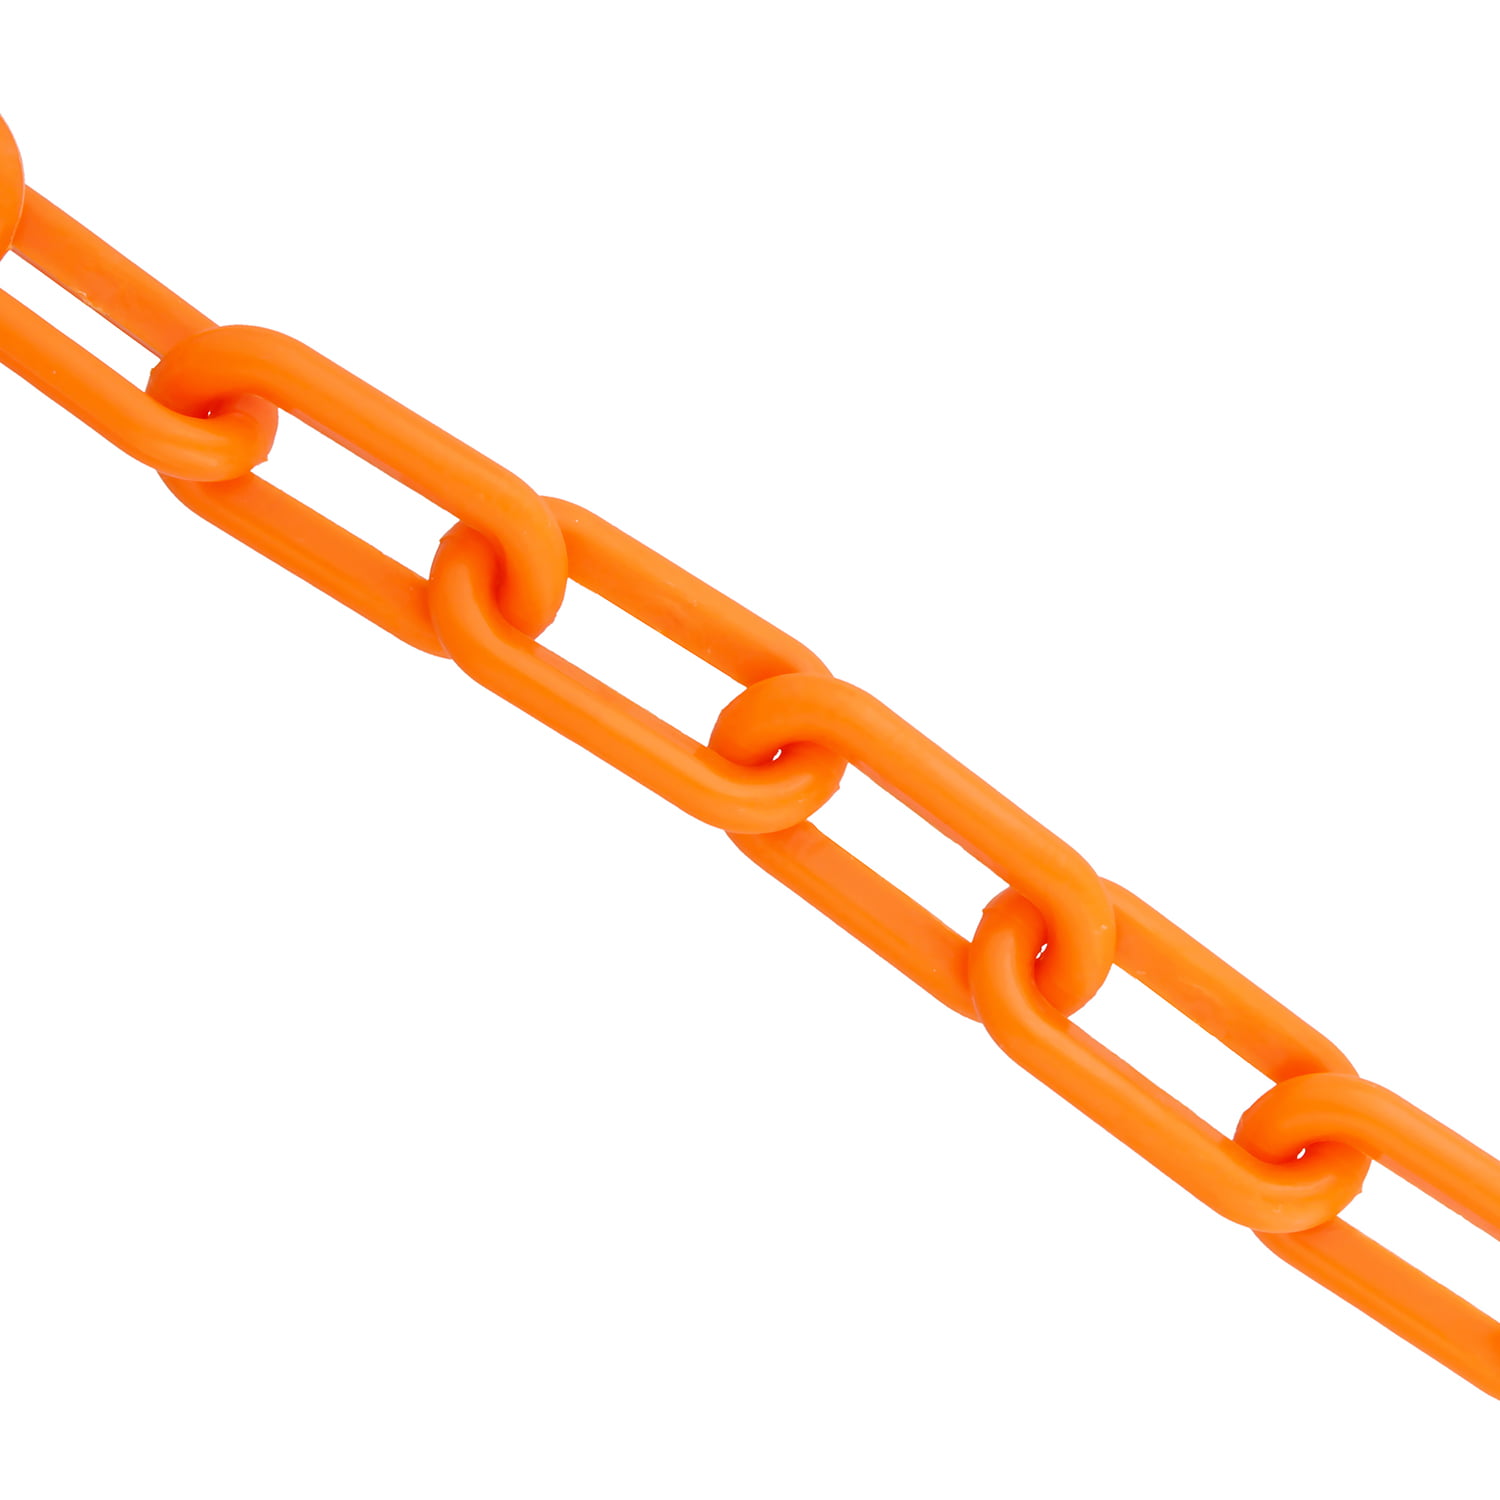 Plastic Chain Links Orange Chain Link Plastic Chains Halloween Chain Crowd Control Chain Orange 25’ Ft x 6mm BISupply 